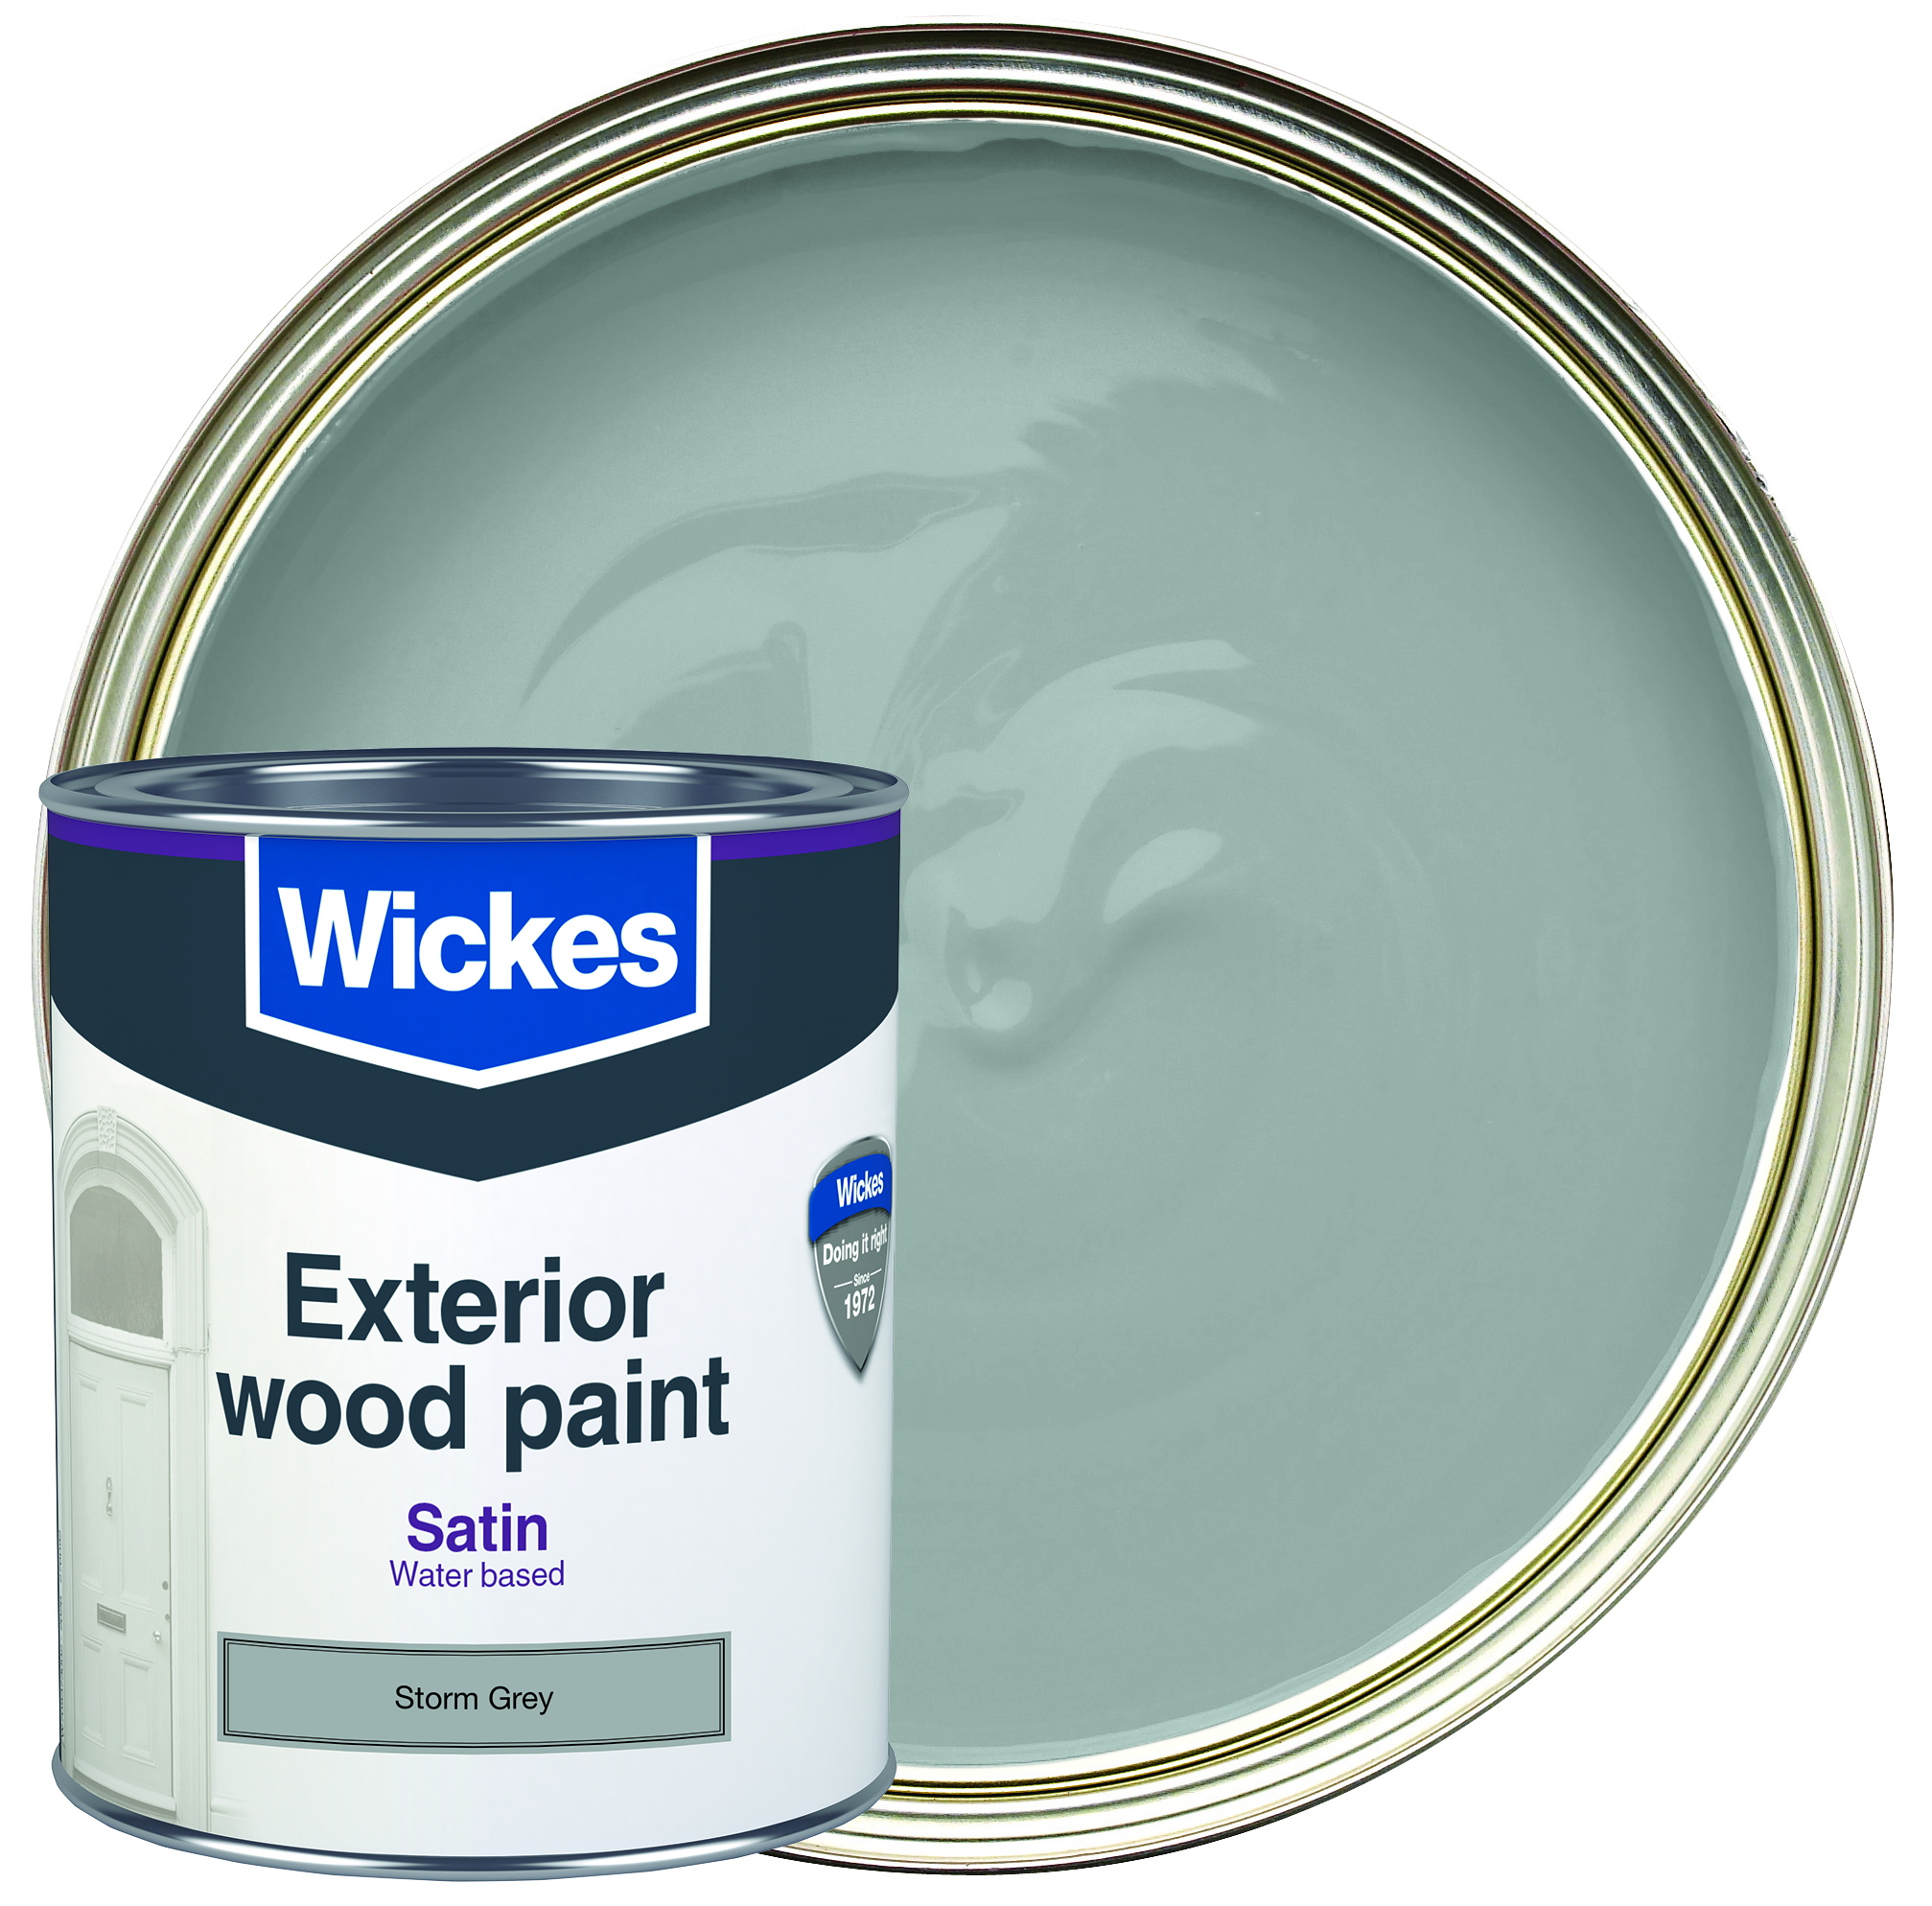 Wickes Exterior Satin Paint - Storm Grey - 750ml